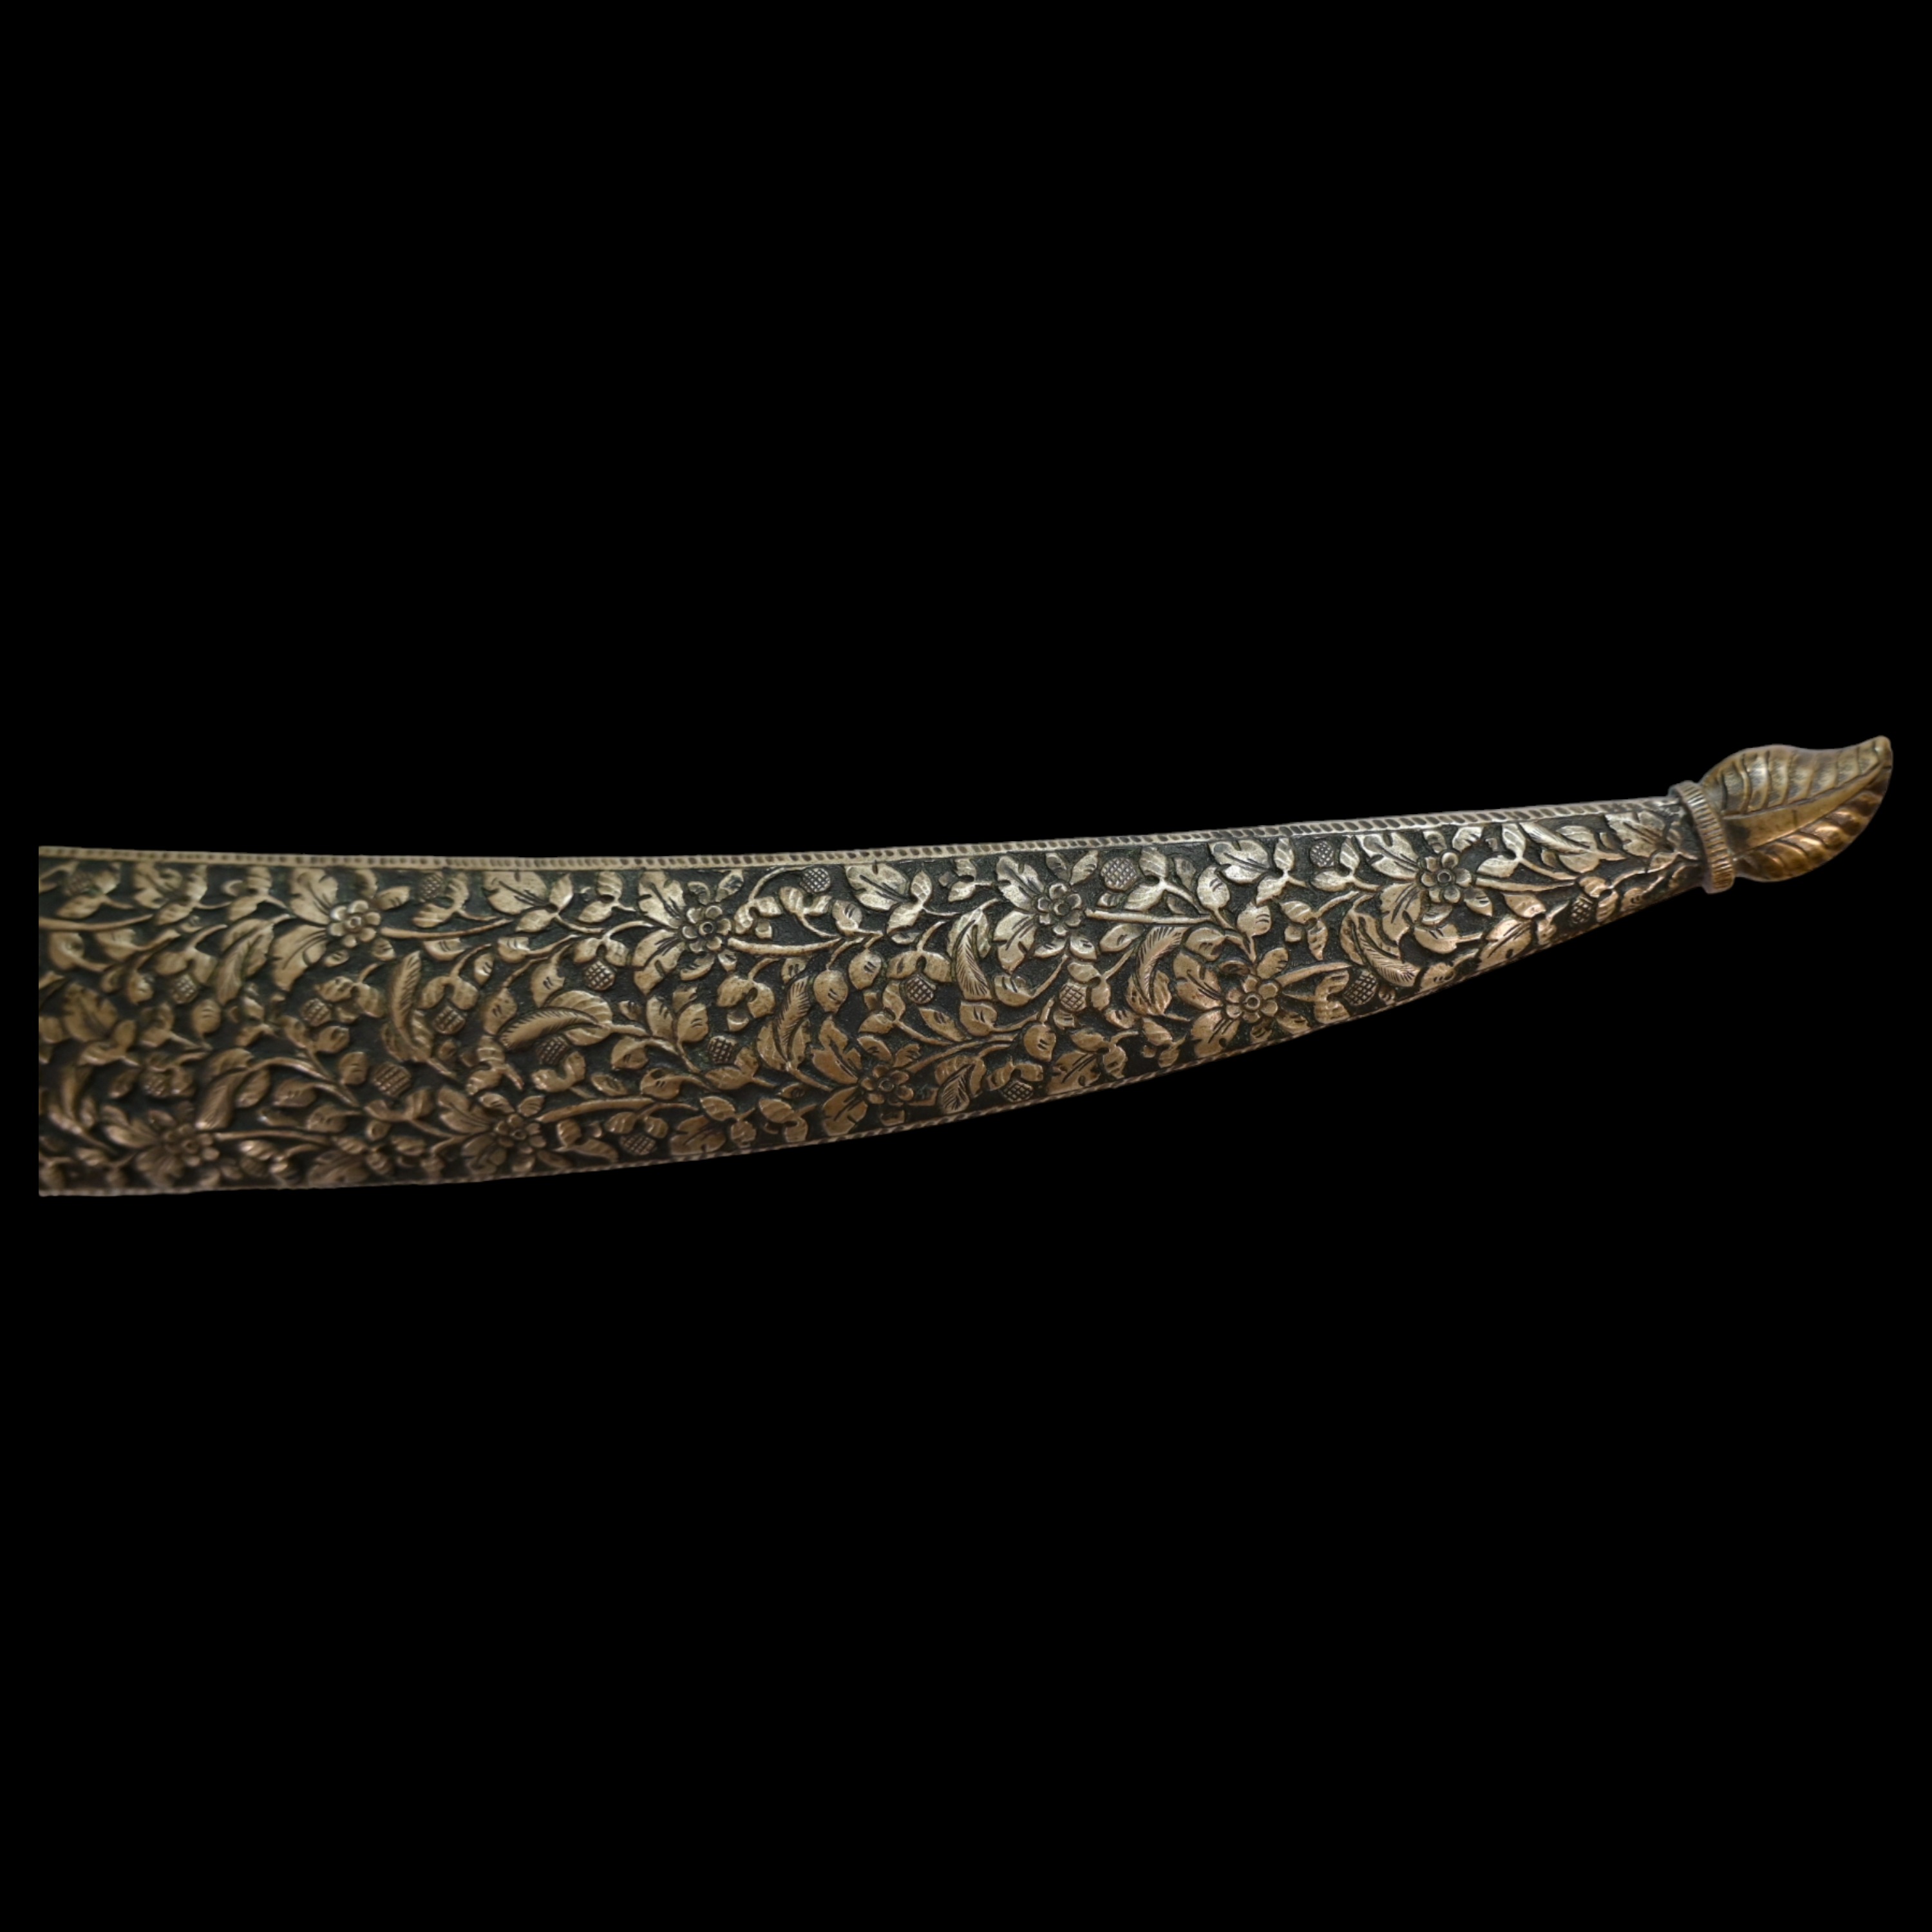 Very rare Dagger with jade handle, Wootz blade, precious stones and gold, Ottoman Empire, 18th C. - Bild 6 aus 19